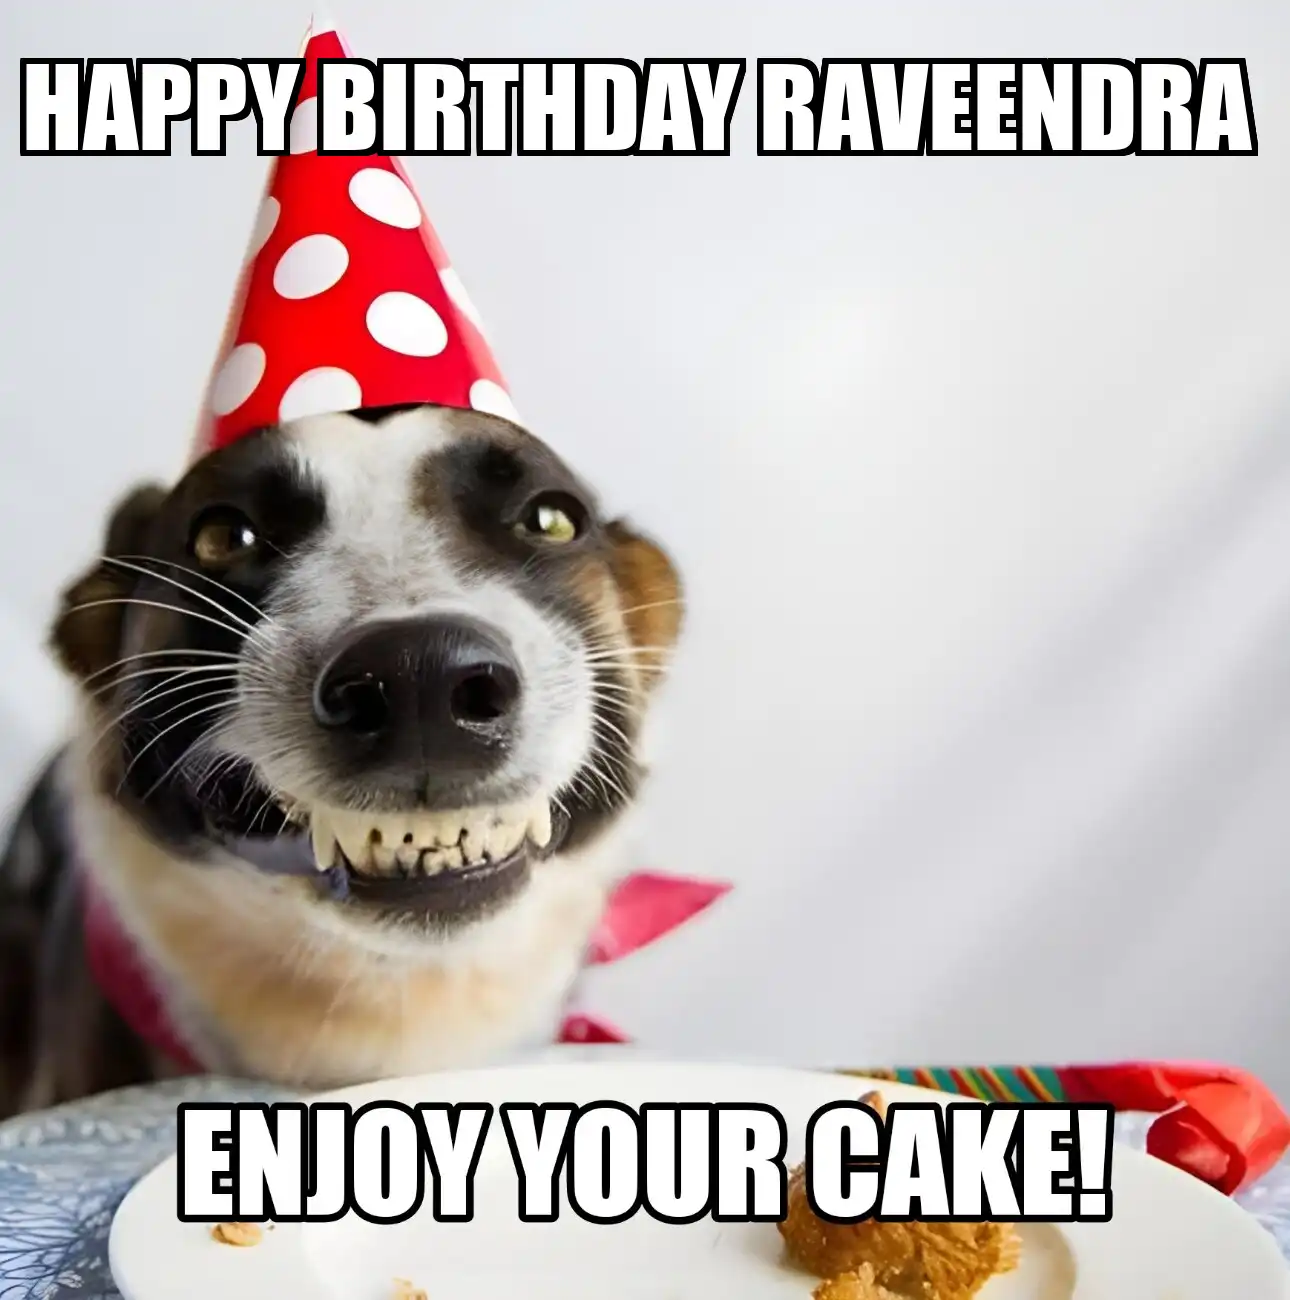 Happy Birthday Raveendra Enjoy Your Cake Dog Meme